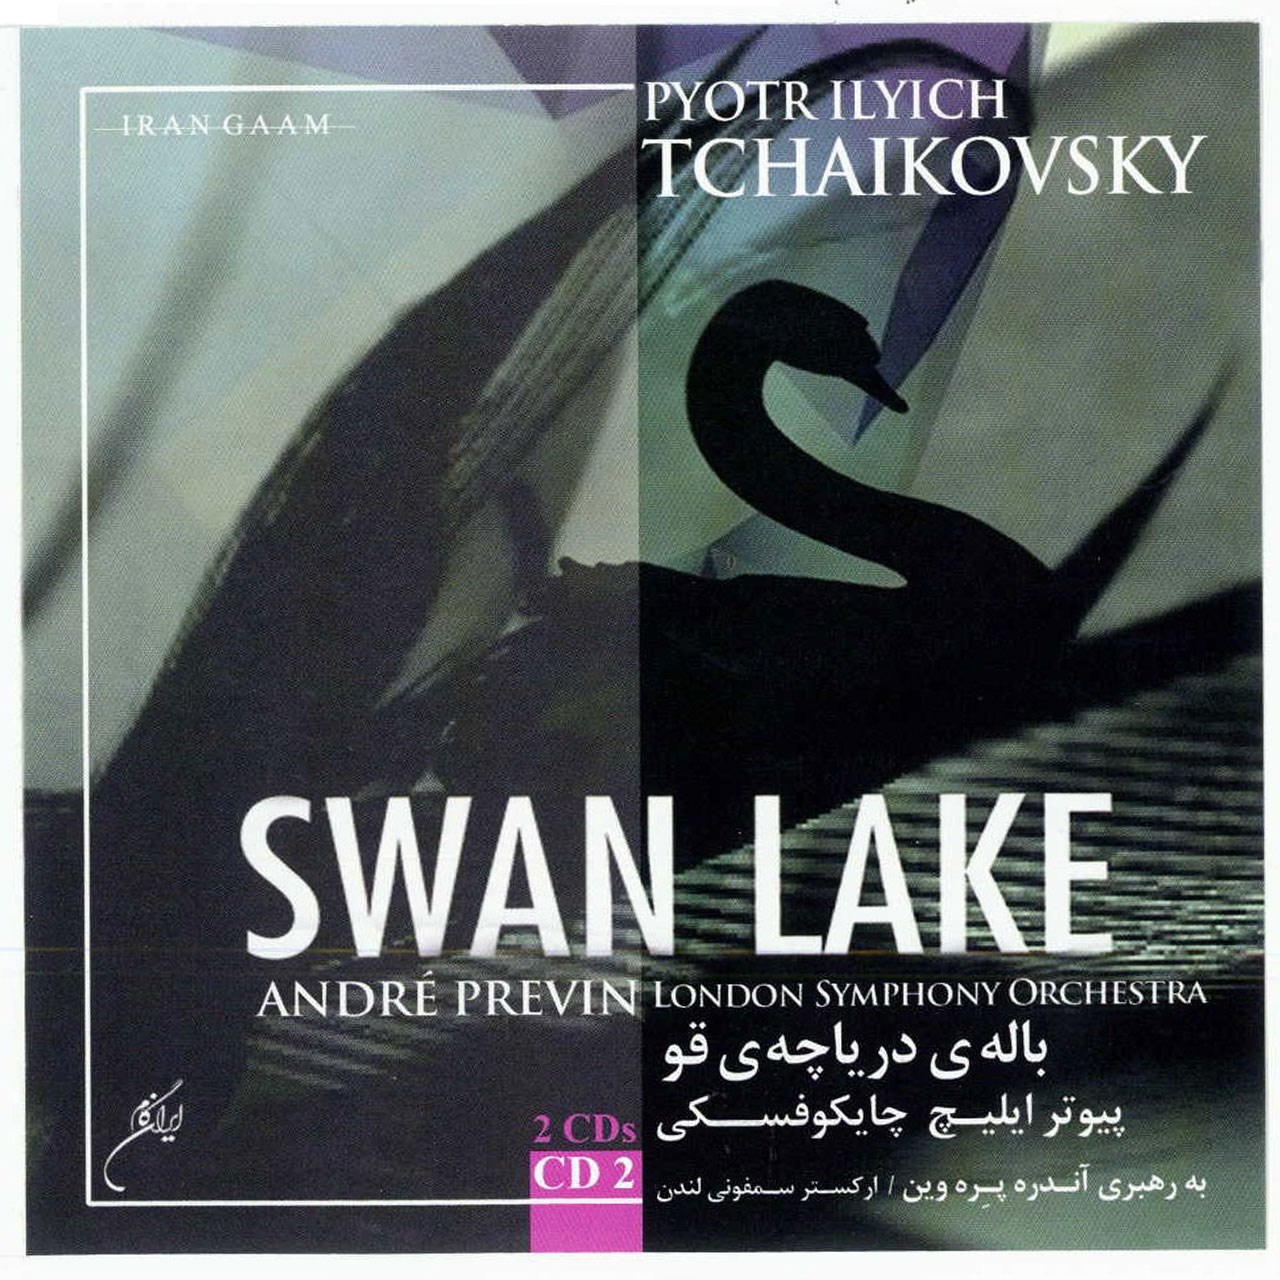 آلبوم موسیقی باله دریاچه قو اثر پیوتر ایلیچ چایکوفسکی - لوح 2